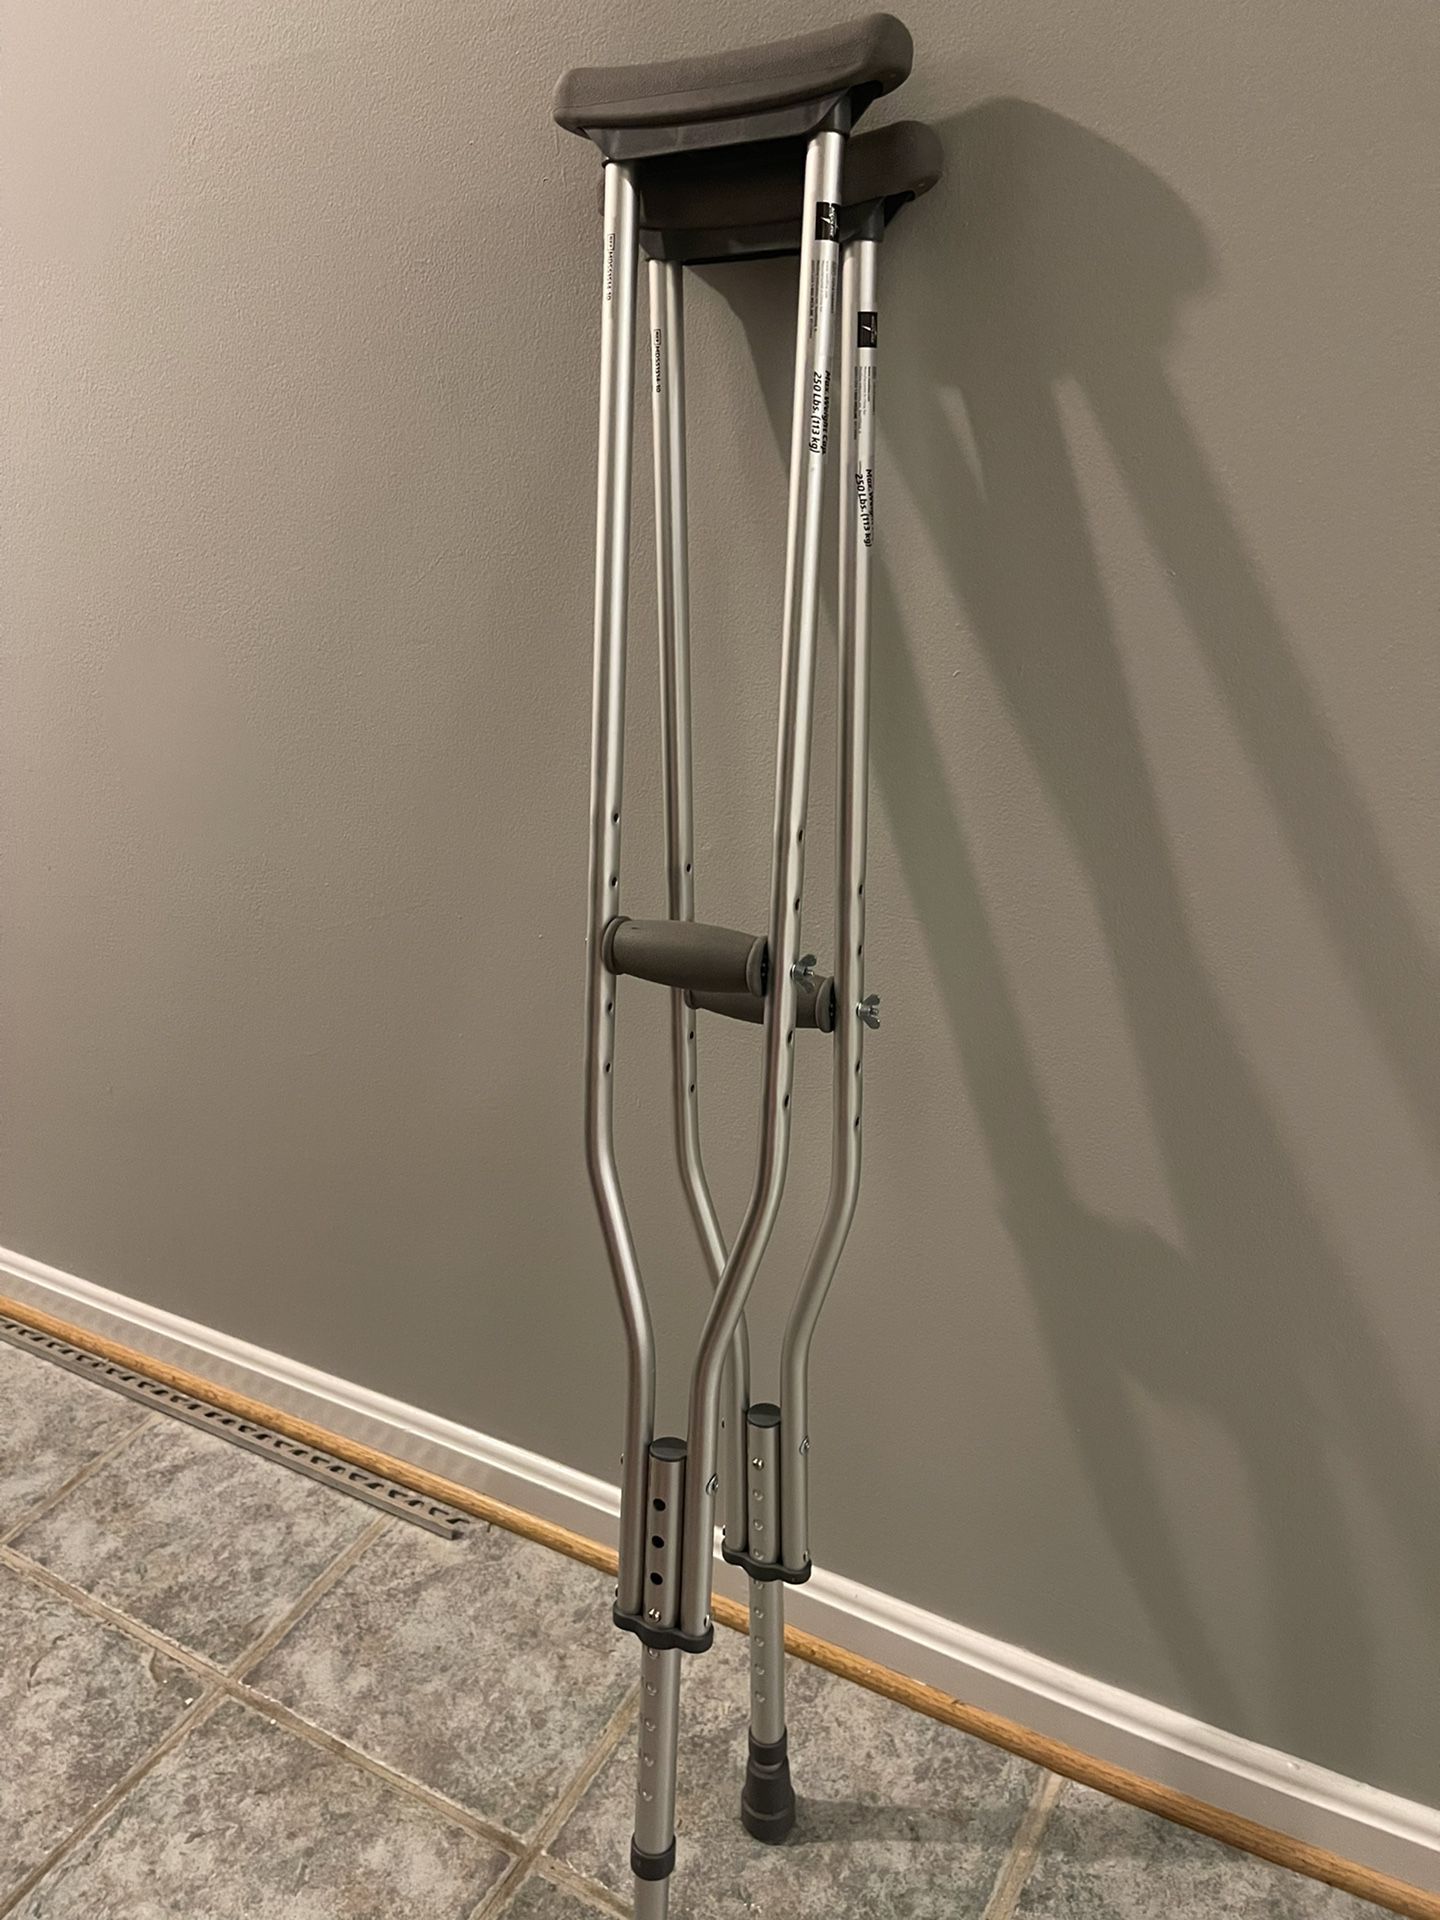 Free Crutches 5’10